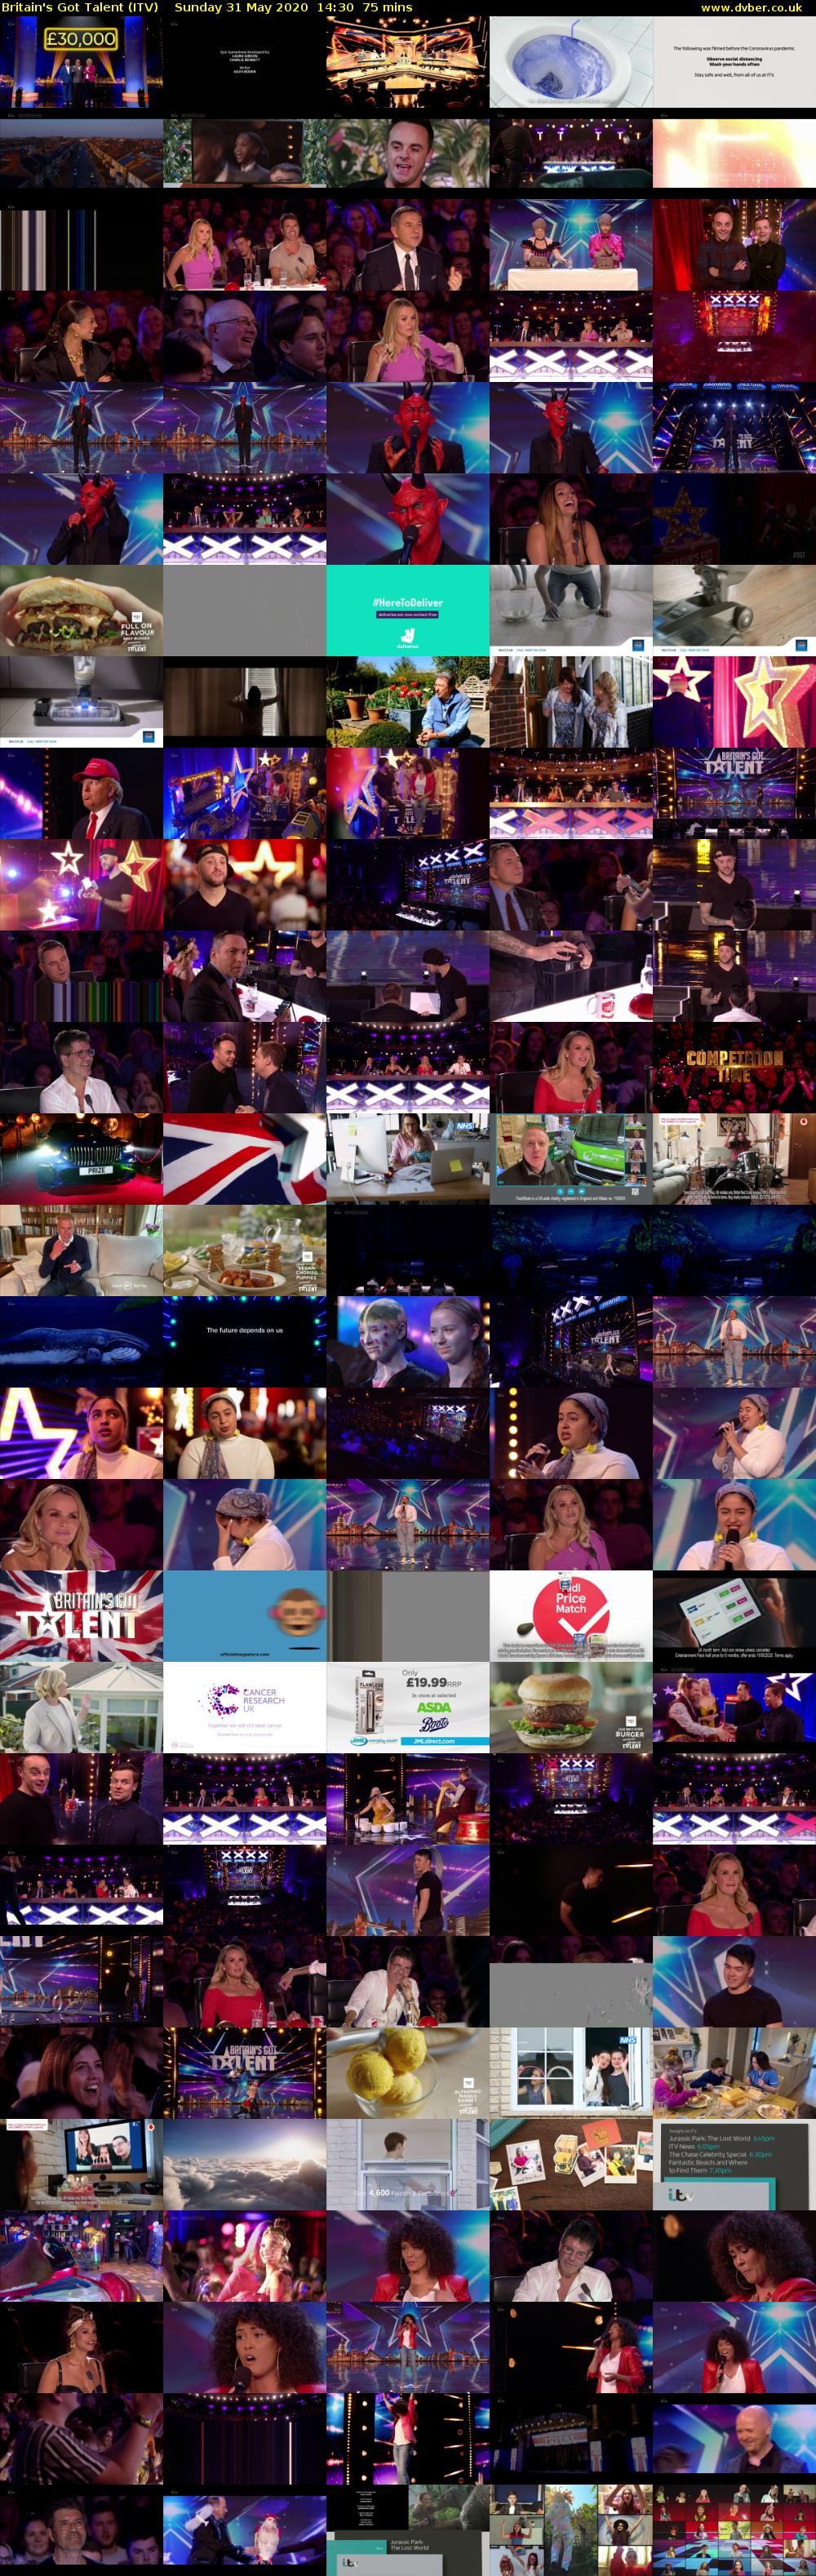 Britain's Got Talent (ITV) Sunday 31 May 2020 14:30 - 15:45